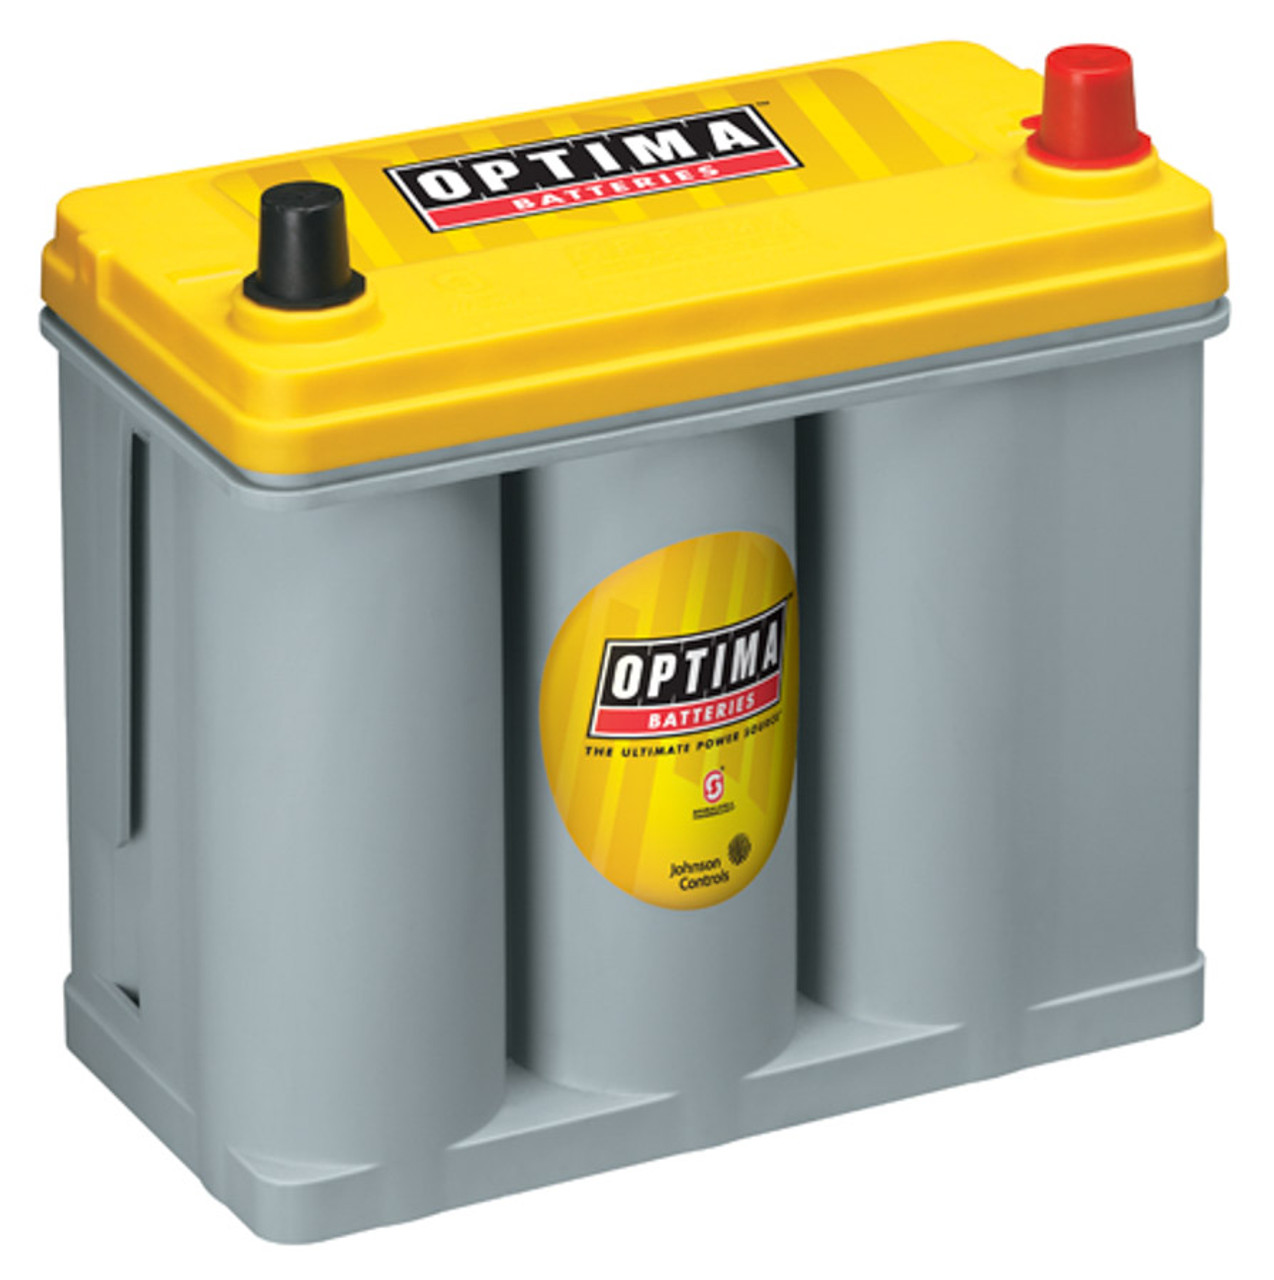 Optima Battery Yellow Top 500cc a/625ca 51R Top Post Rev - OPT8073-167